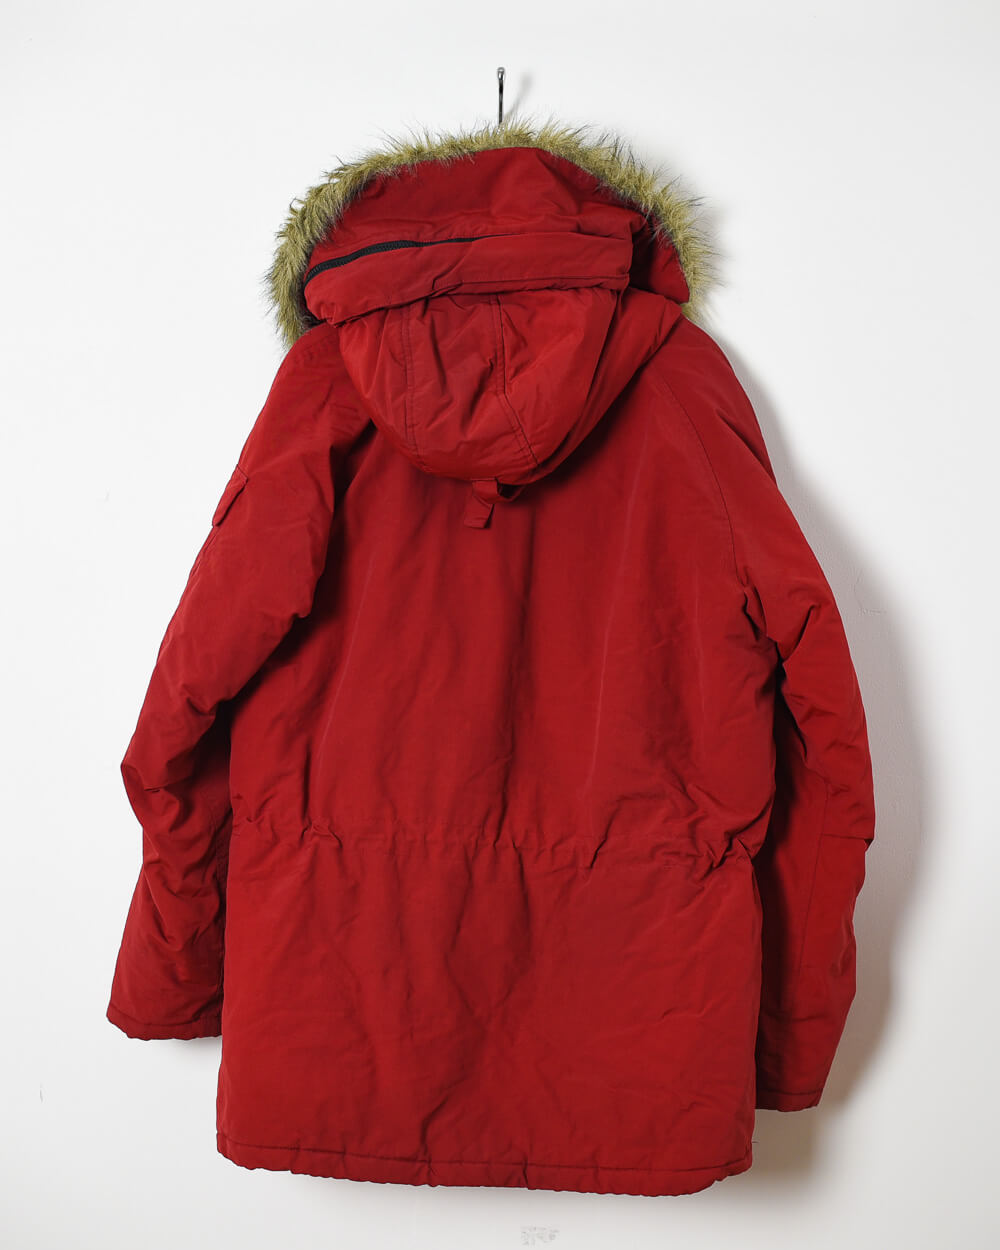 Red Carhartt Parka Jacket - X-Large